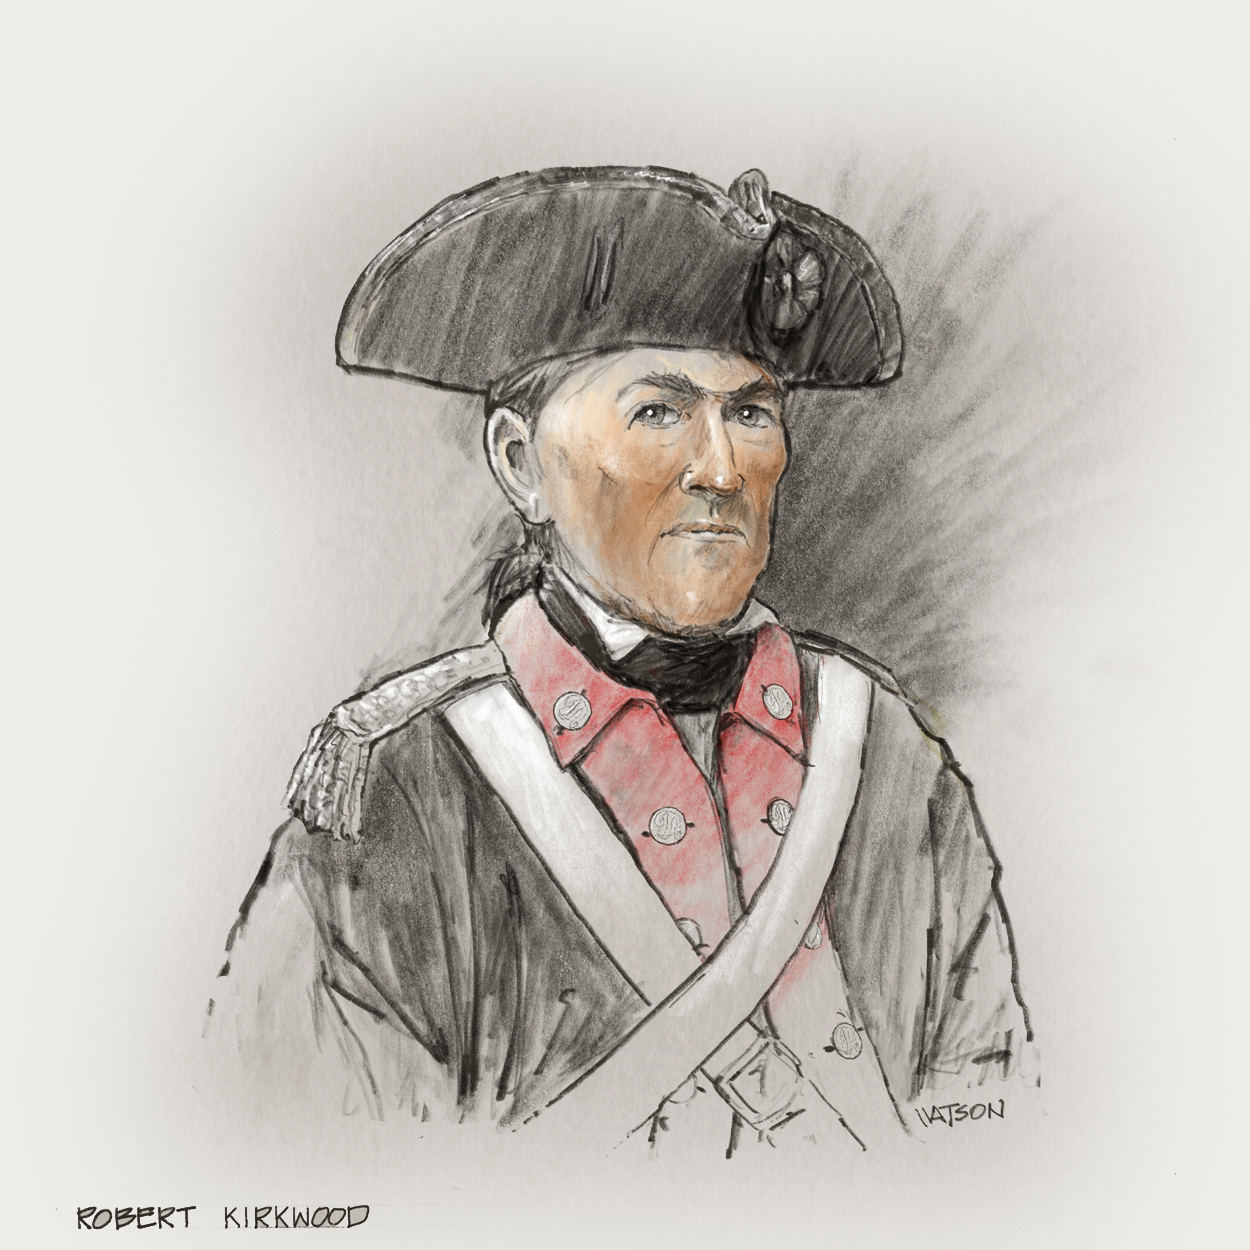 Drawn portrait of Robert Kirkwood